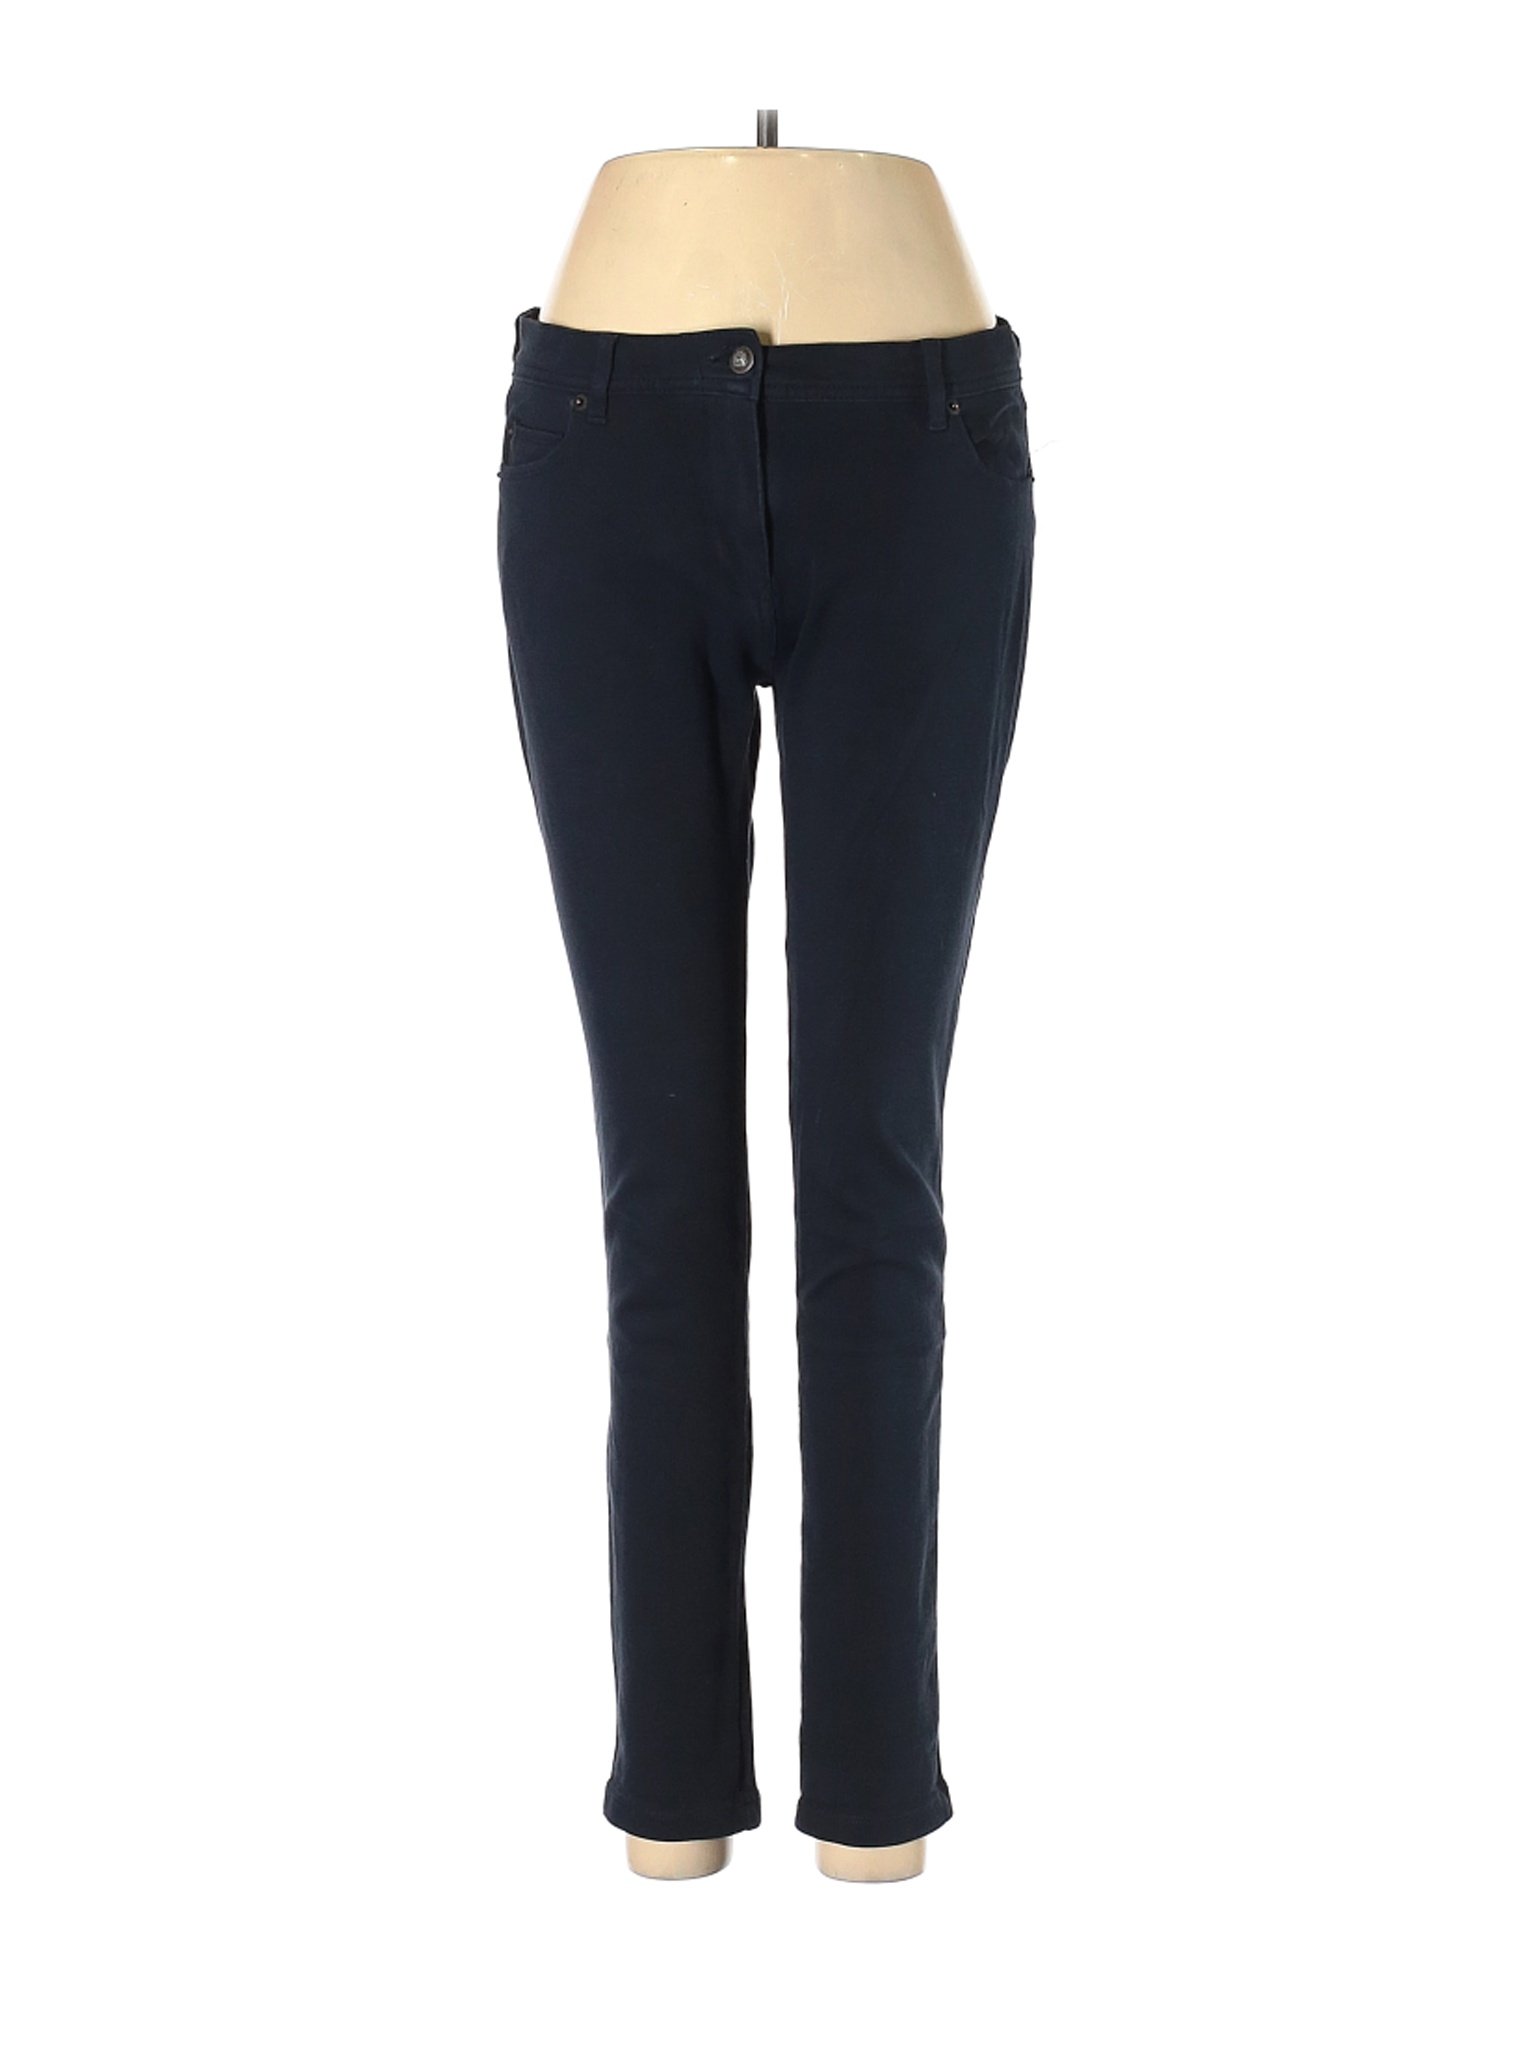 Zara Collection Women Black Casual Pants M | eBay